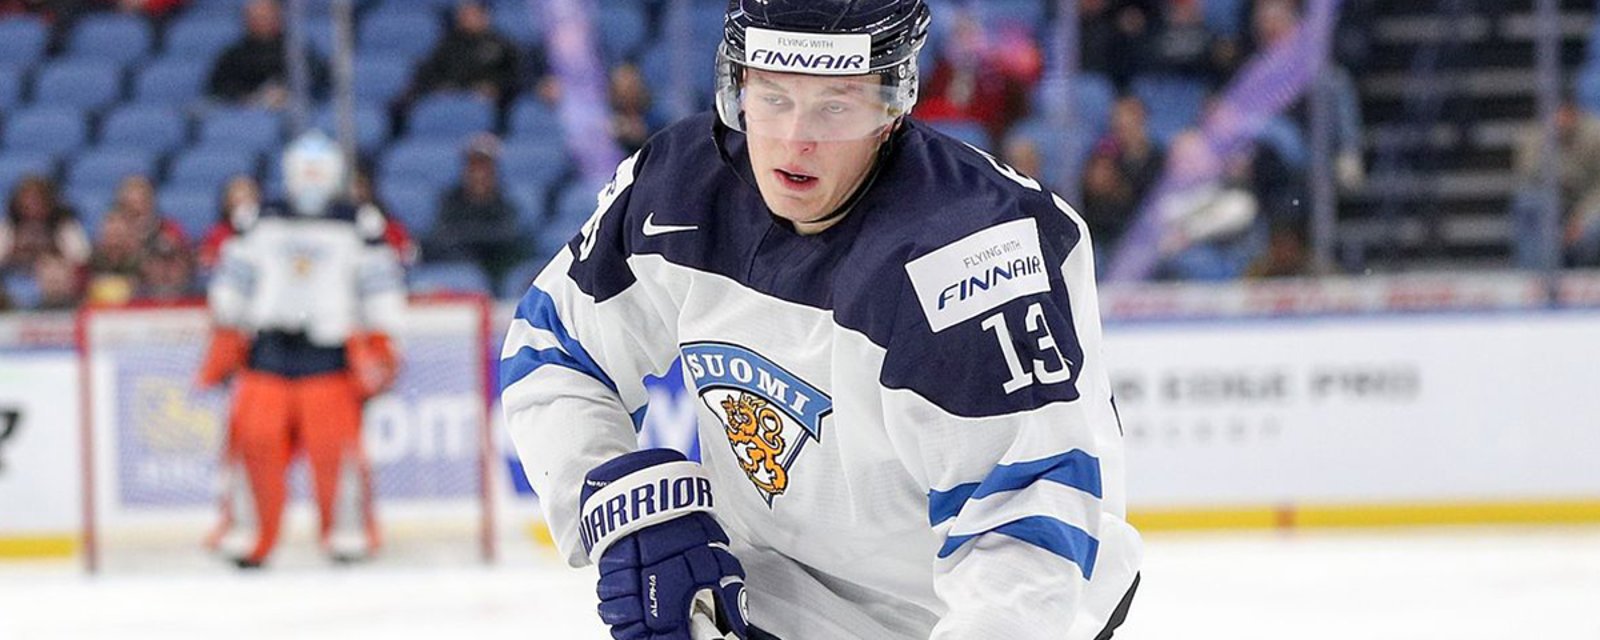 Top NHL prospect Vesalainen rejects World Juniors invite, angers team